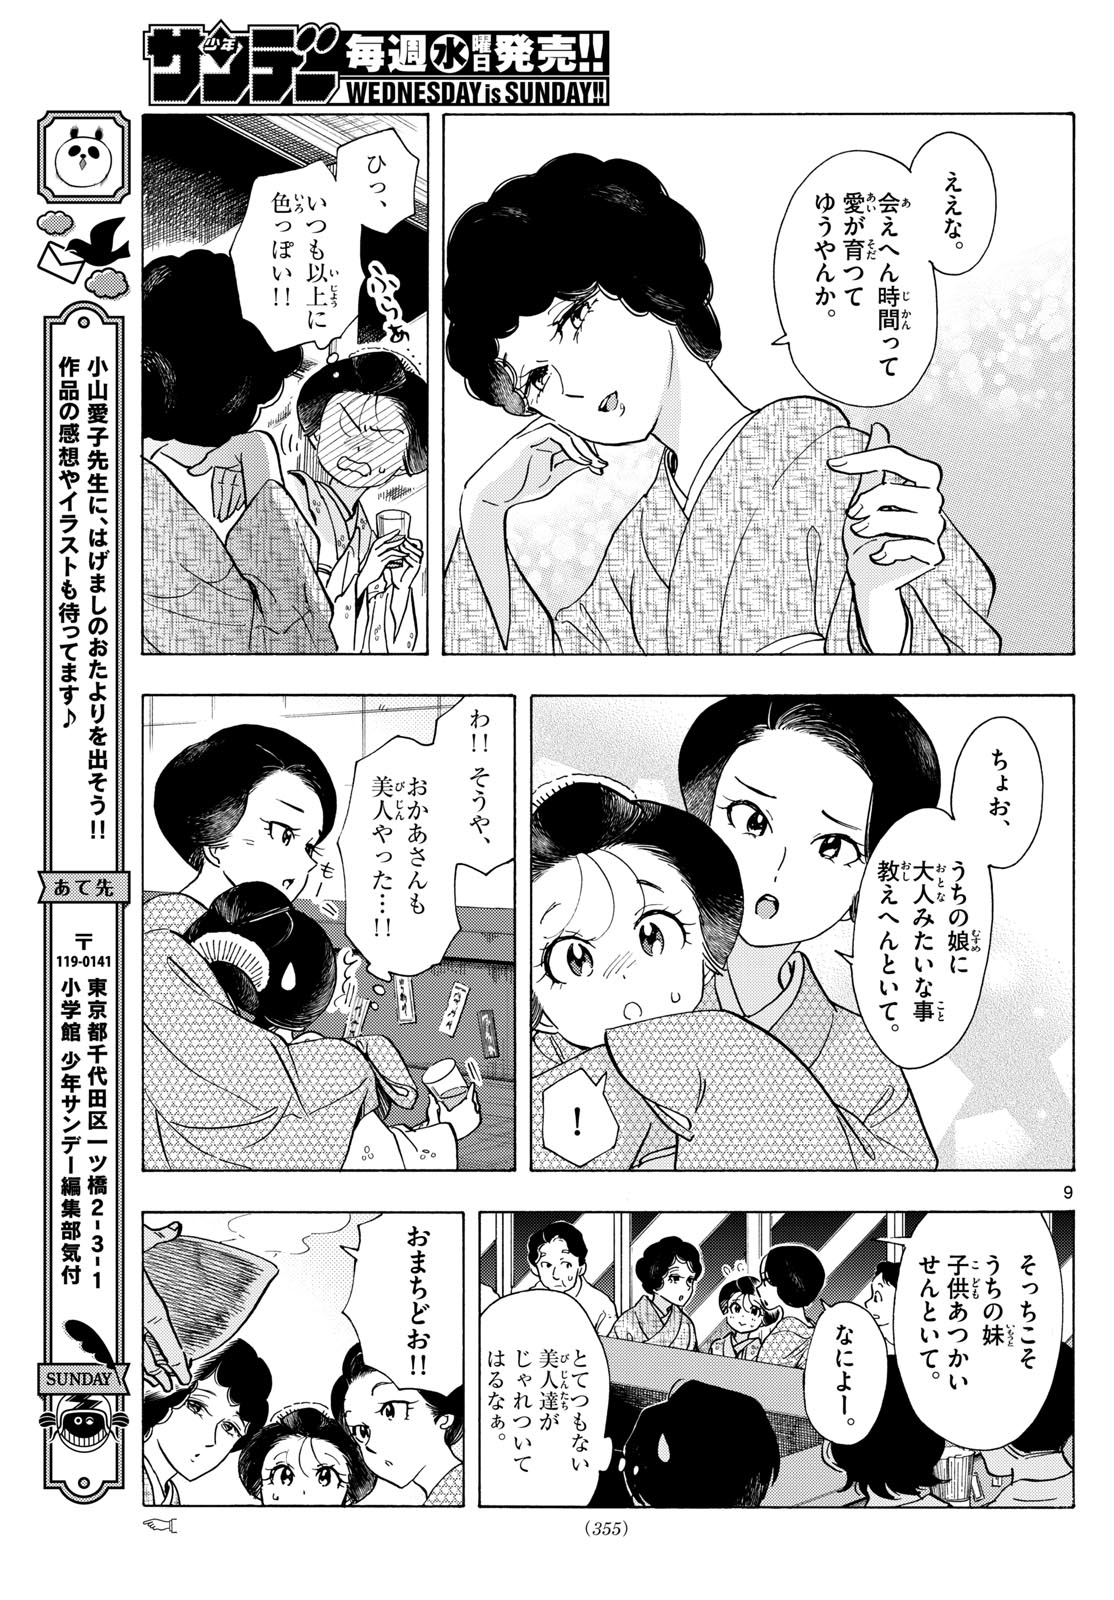 Maiko-san Chi no Makanai-san - Chapter 298 - Page 9